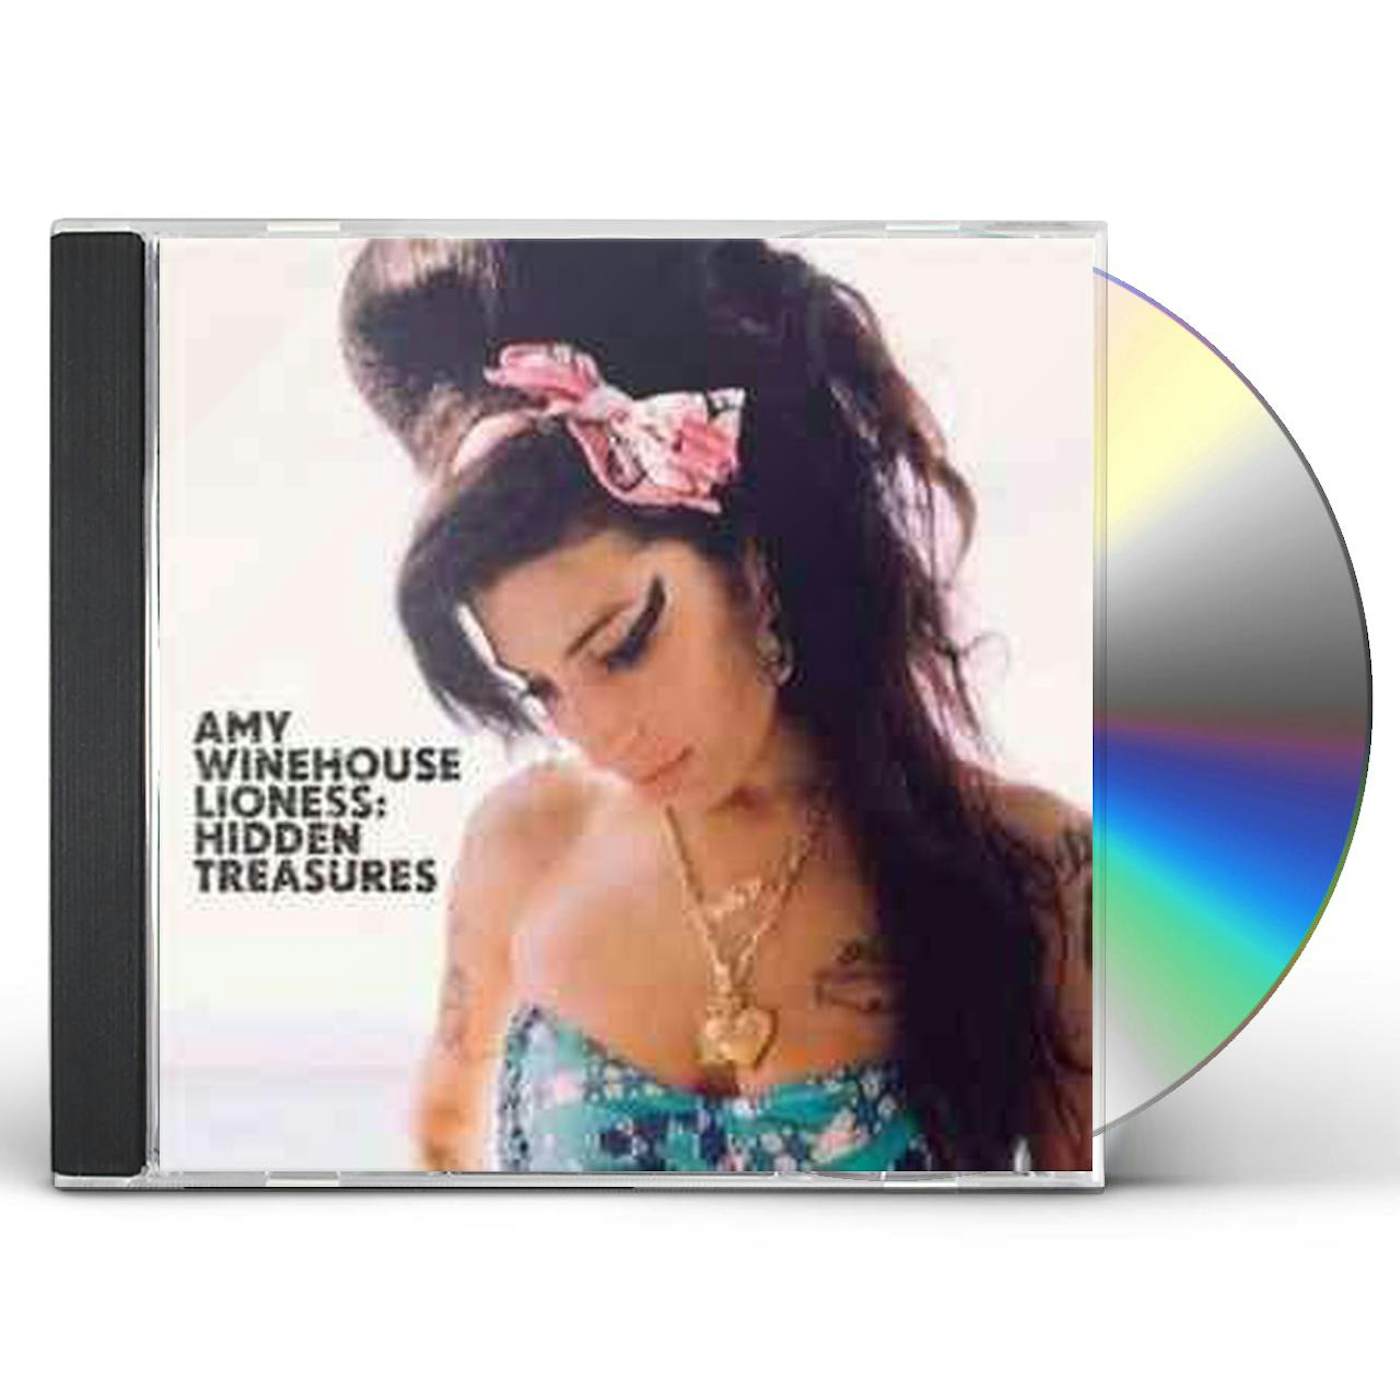 Amy Winehouse LIONESS: HIDDEN TREASURES CD